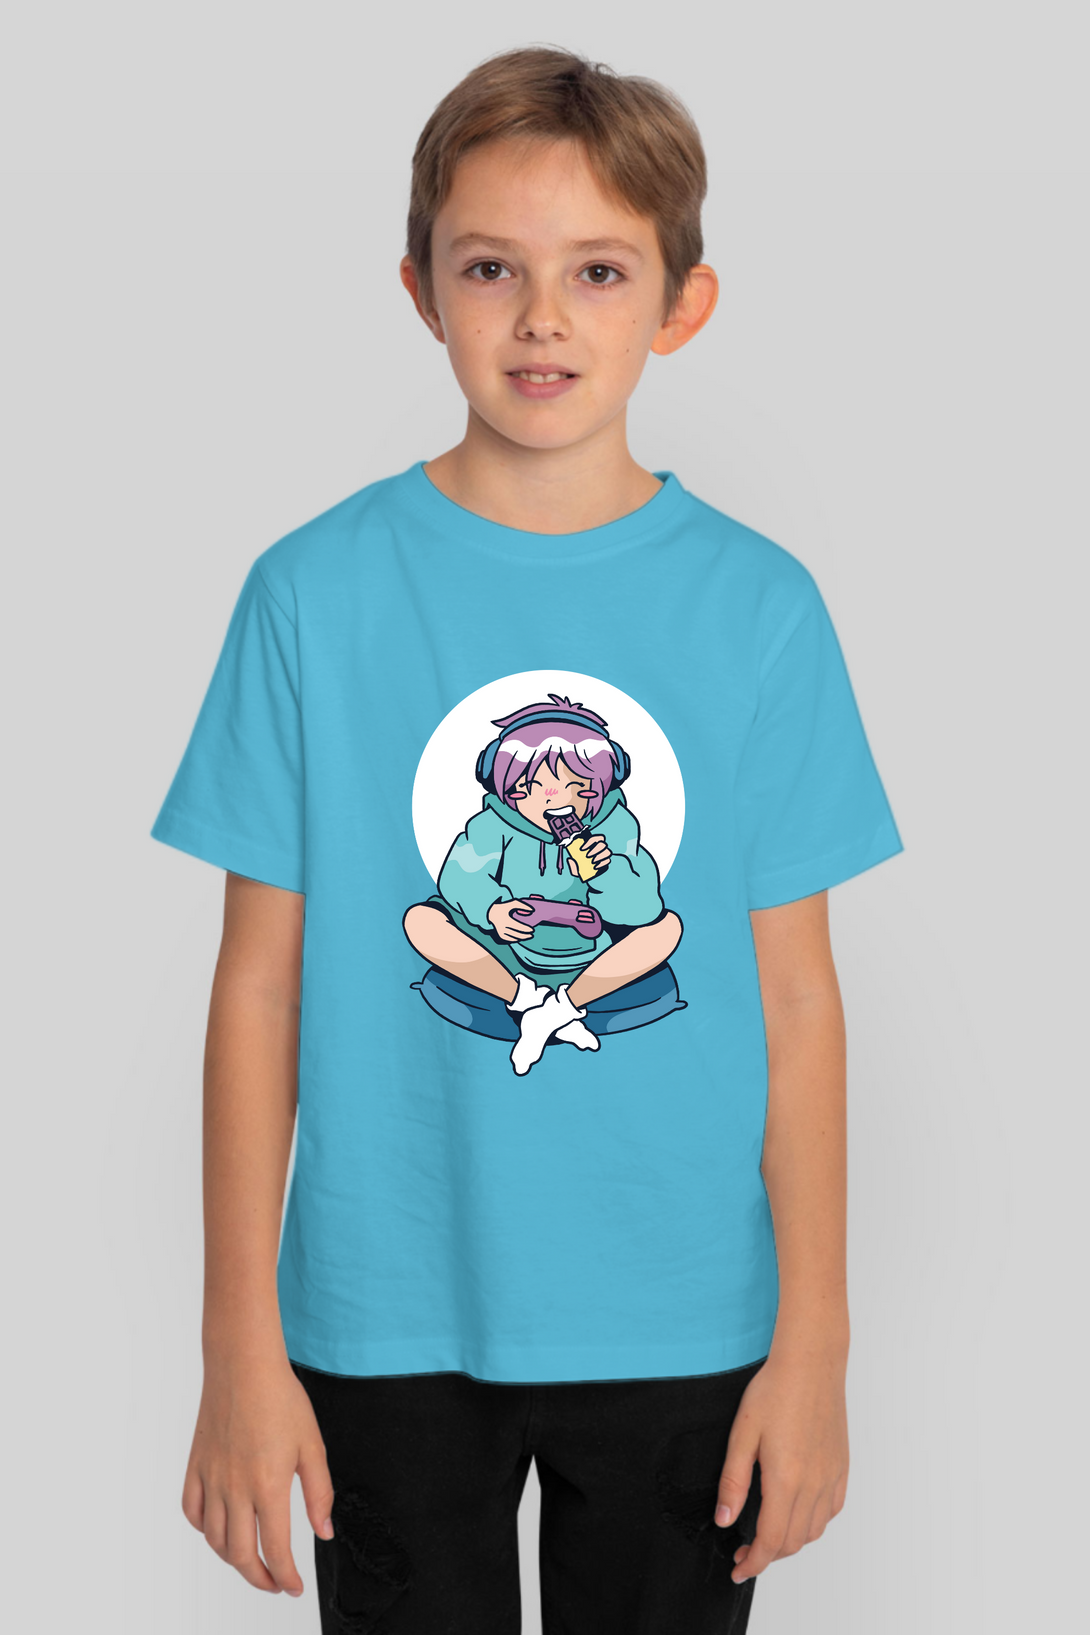 Gamer Anime Printed T-Shirt For Boy - WowWaves - 8